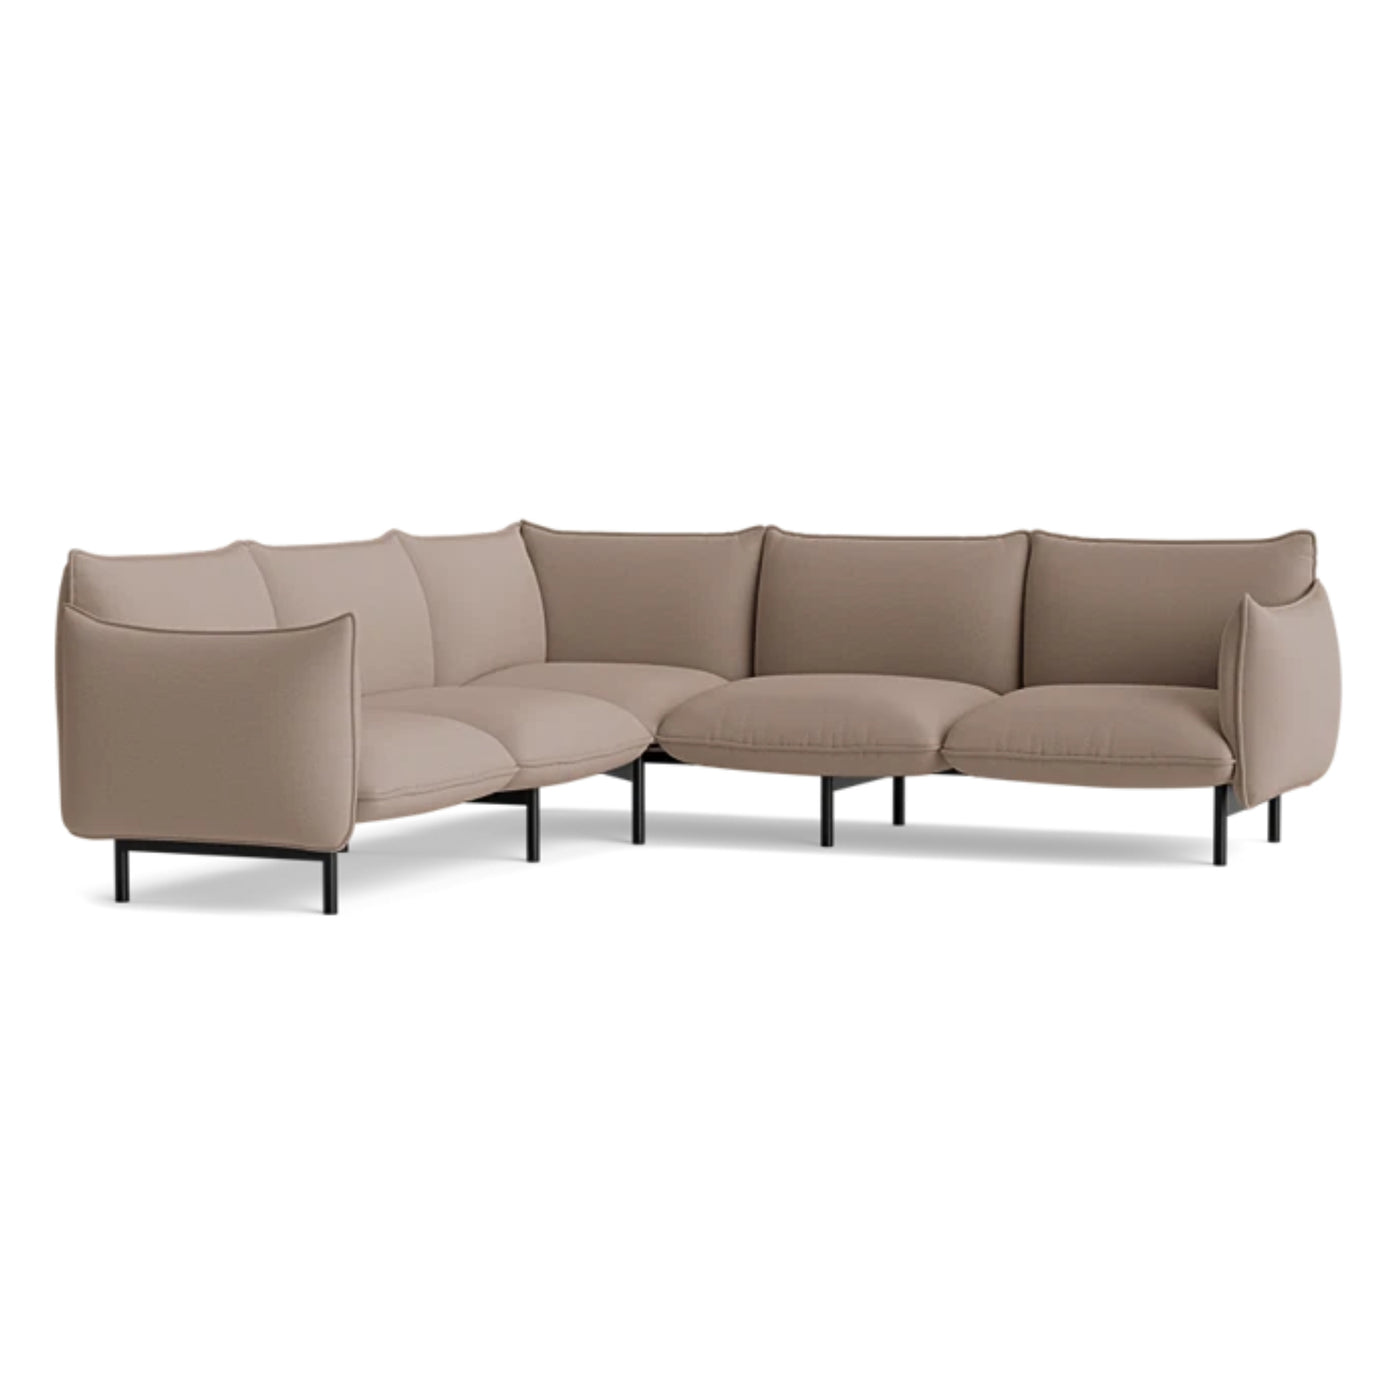 Normann Copenhagen Ark 4 Seater Corner Modular Sofa at someday designs. #colour_steelcut-trio-426